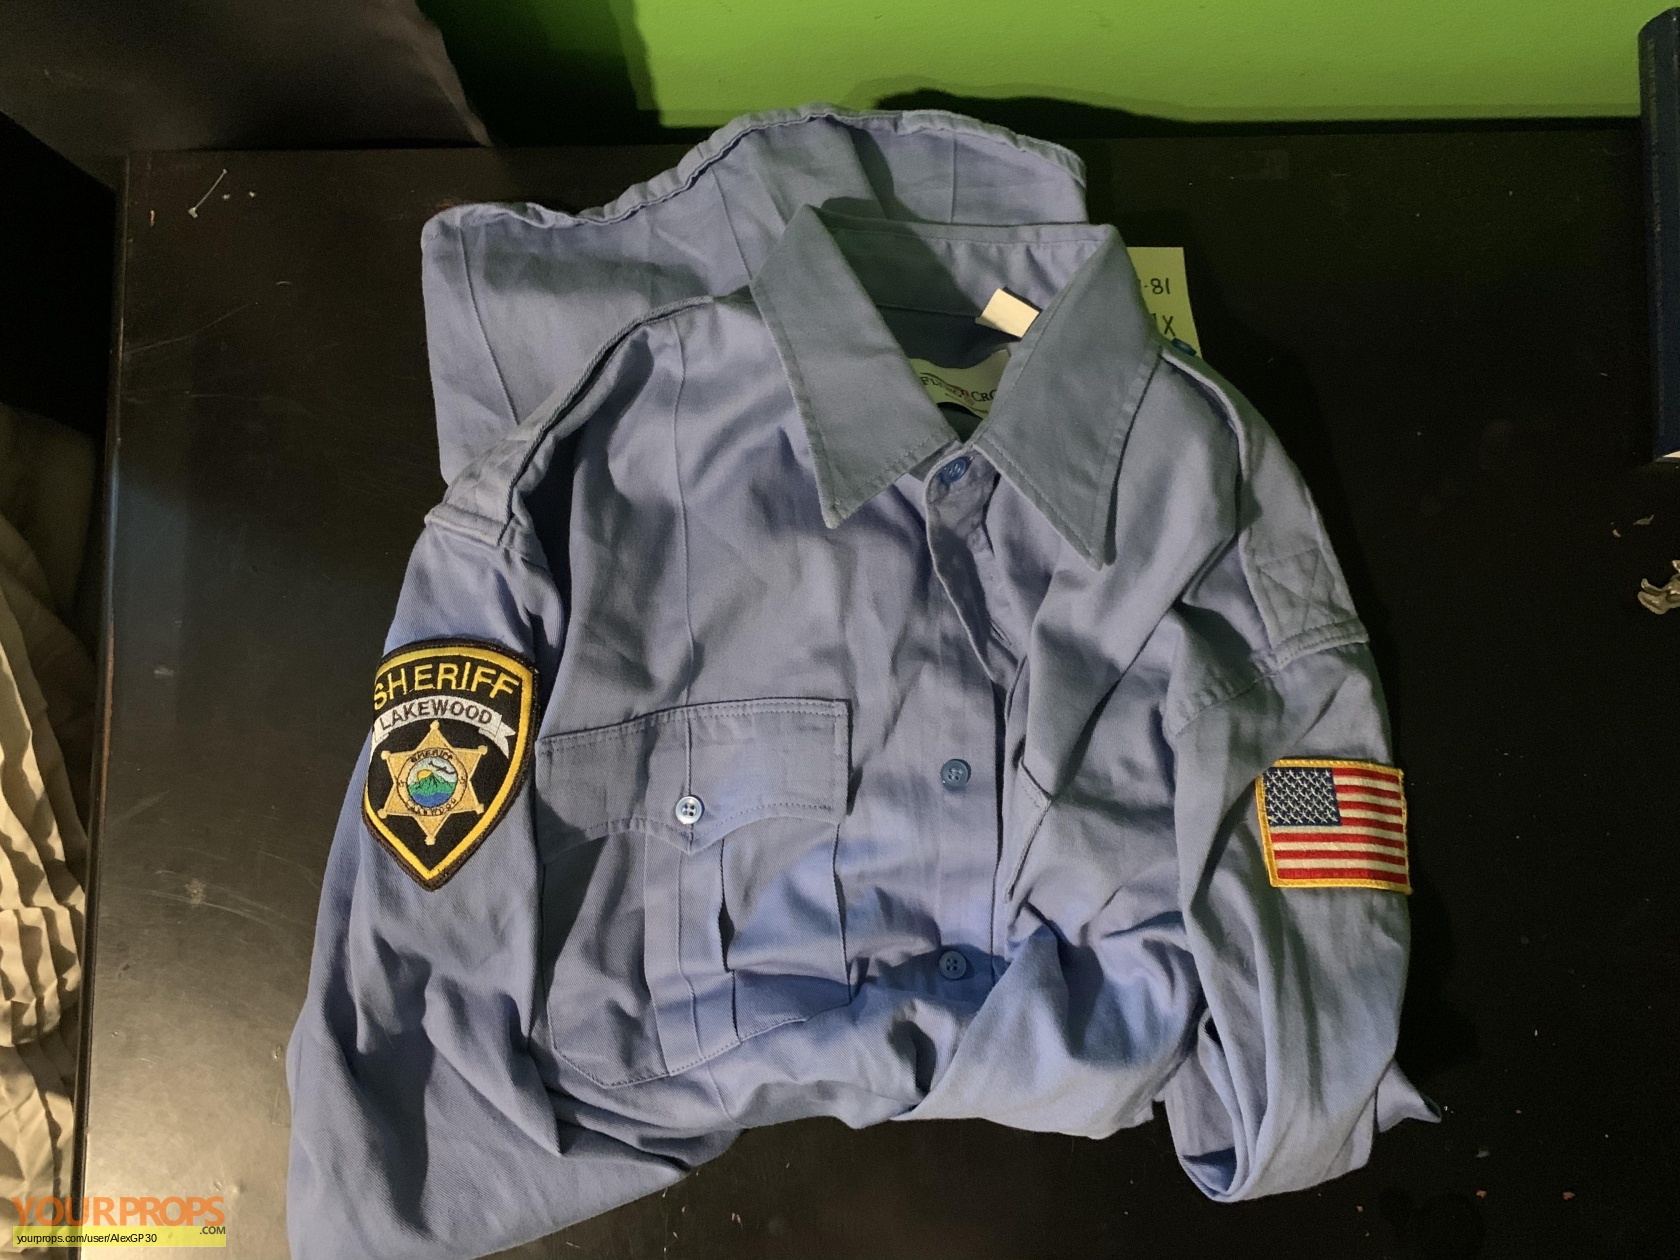 Scream: The TV Series Lakewood Sheriff shirt original TV series costume